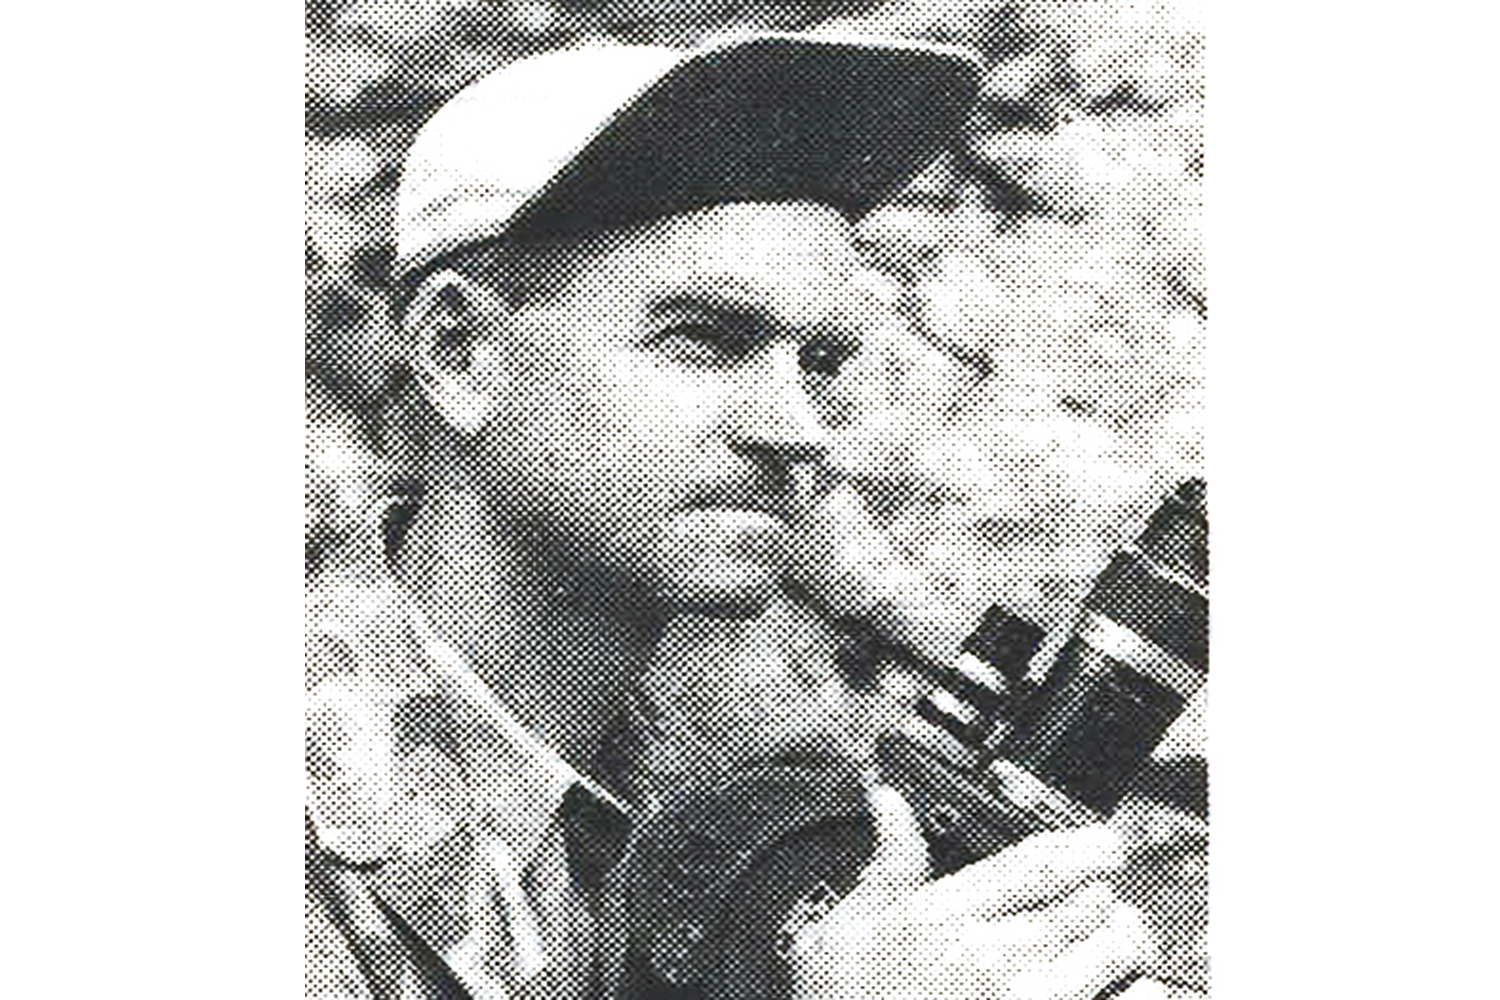 Cecil Rhode with camera